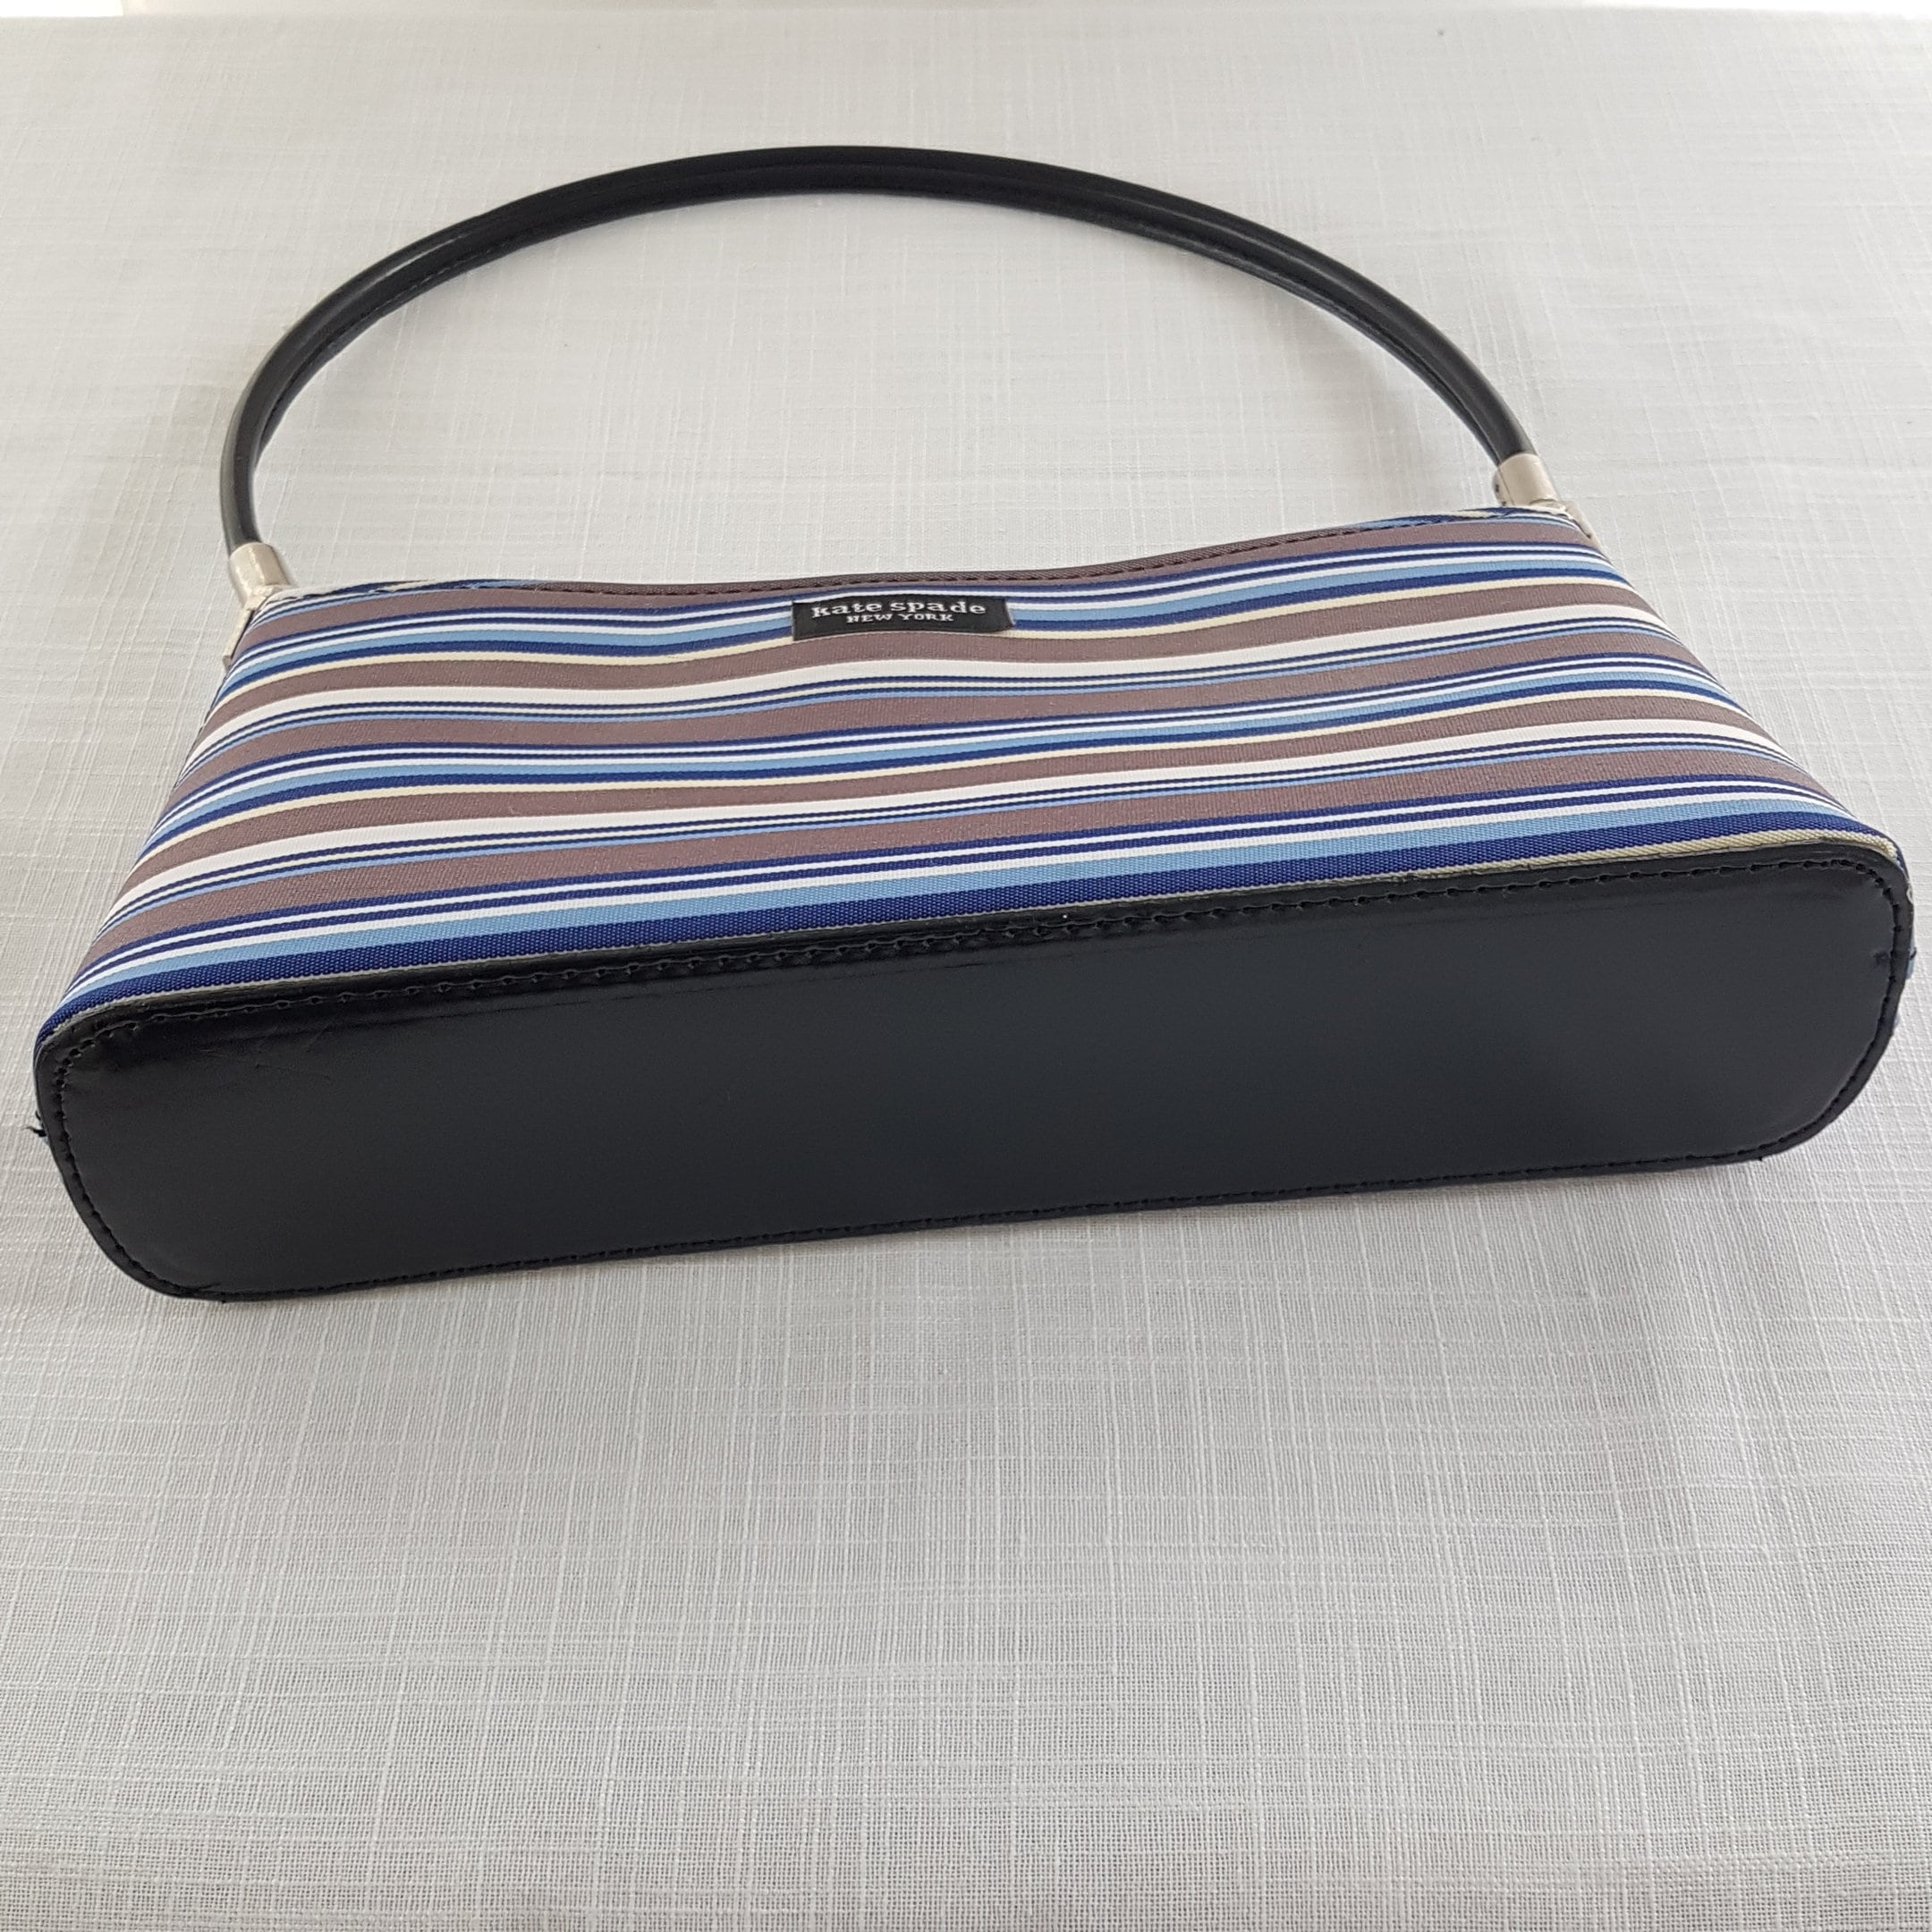 Kate Spade Handbag Purse Laurel Way Berber Striped Crossbody Pink Blue  Ivory | eBay